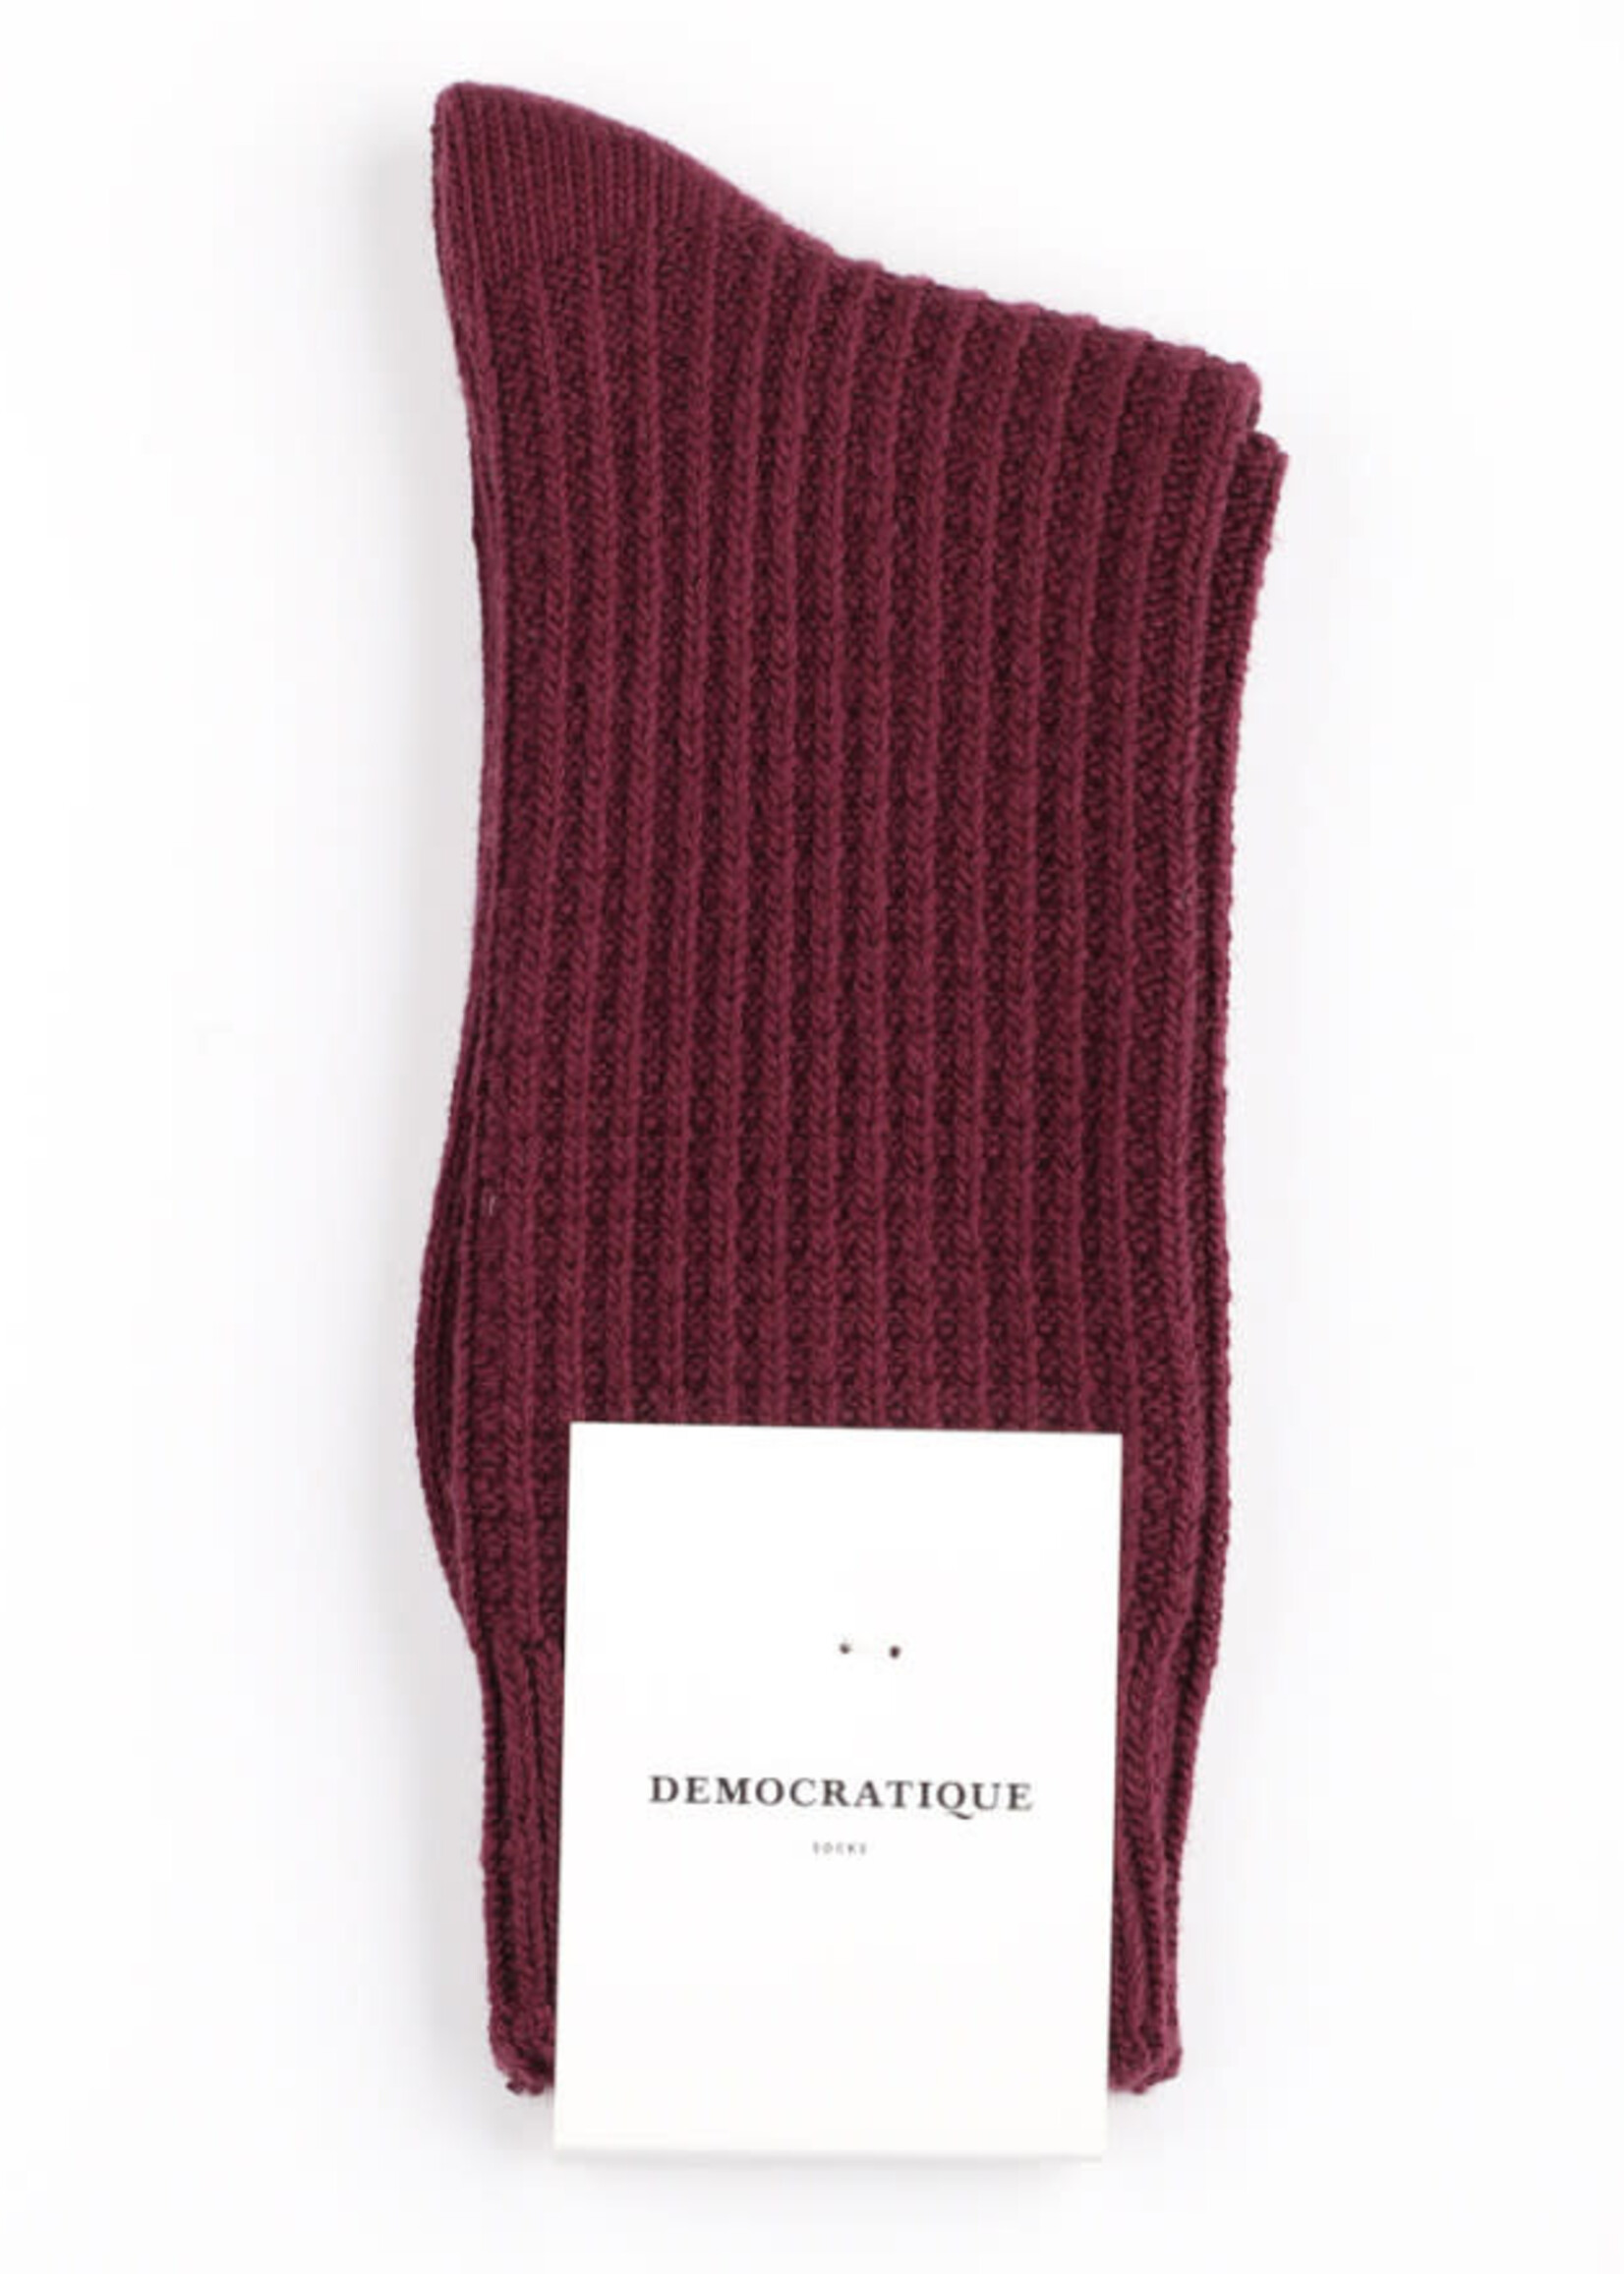 Democratique socks Democratique socks Relax Waffle knit Heavy Plum